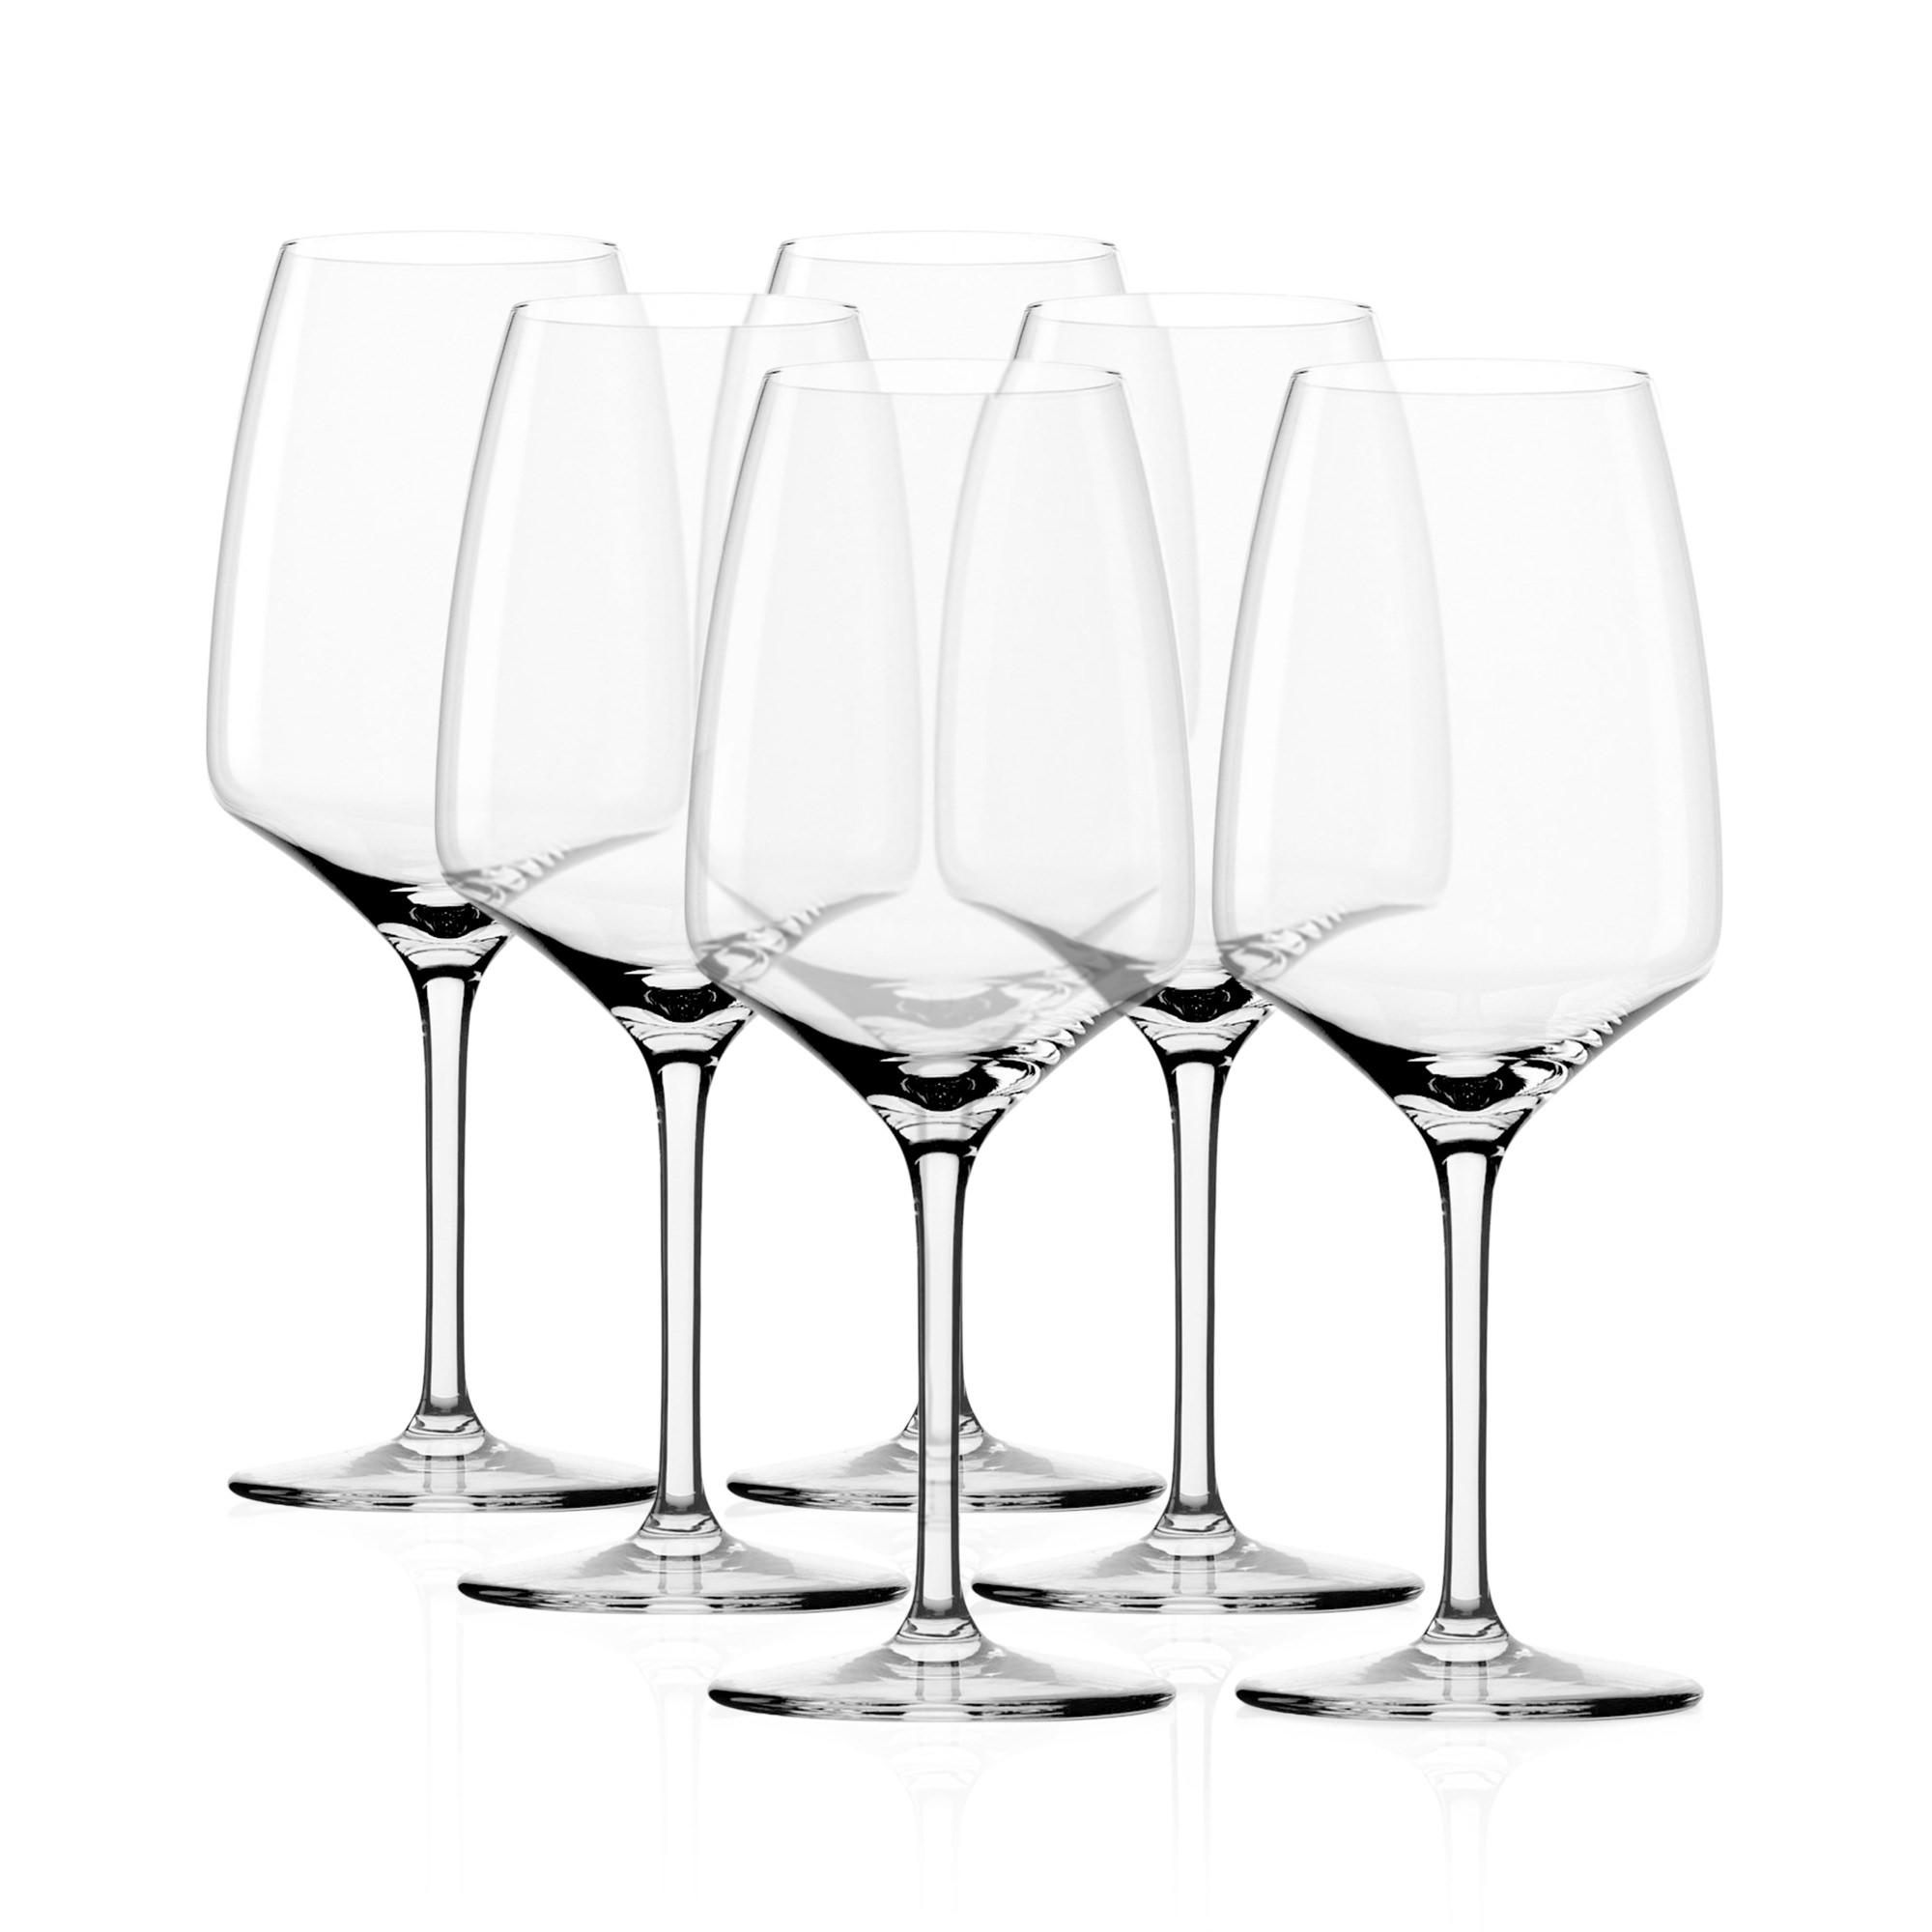 Stolzle Experience Bordeaux Wine Glass 645ml Set of 6 Image 1